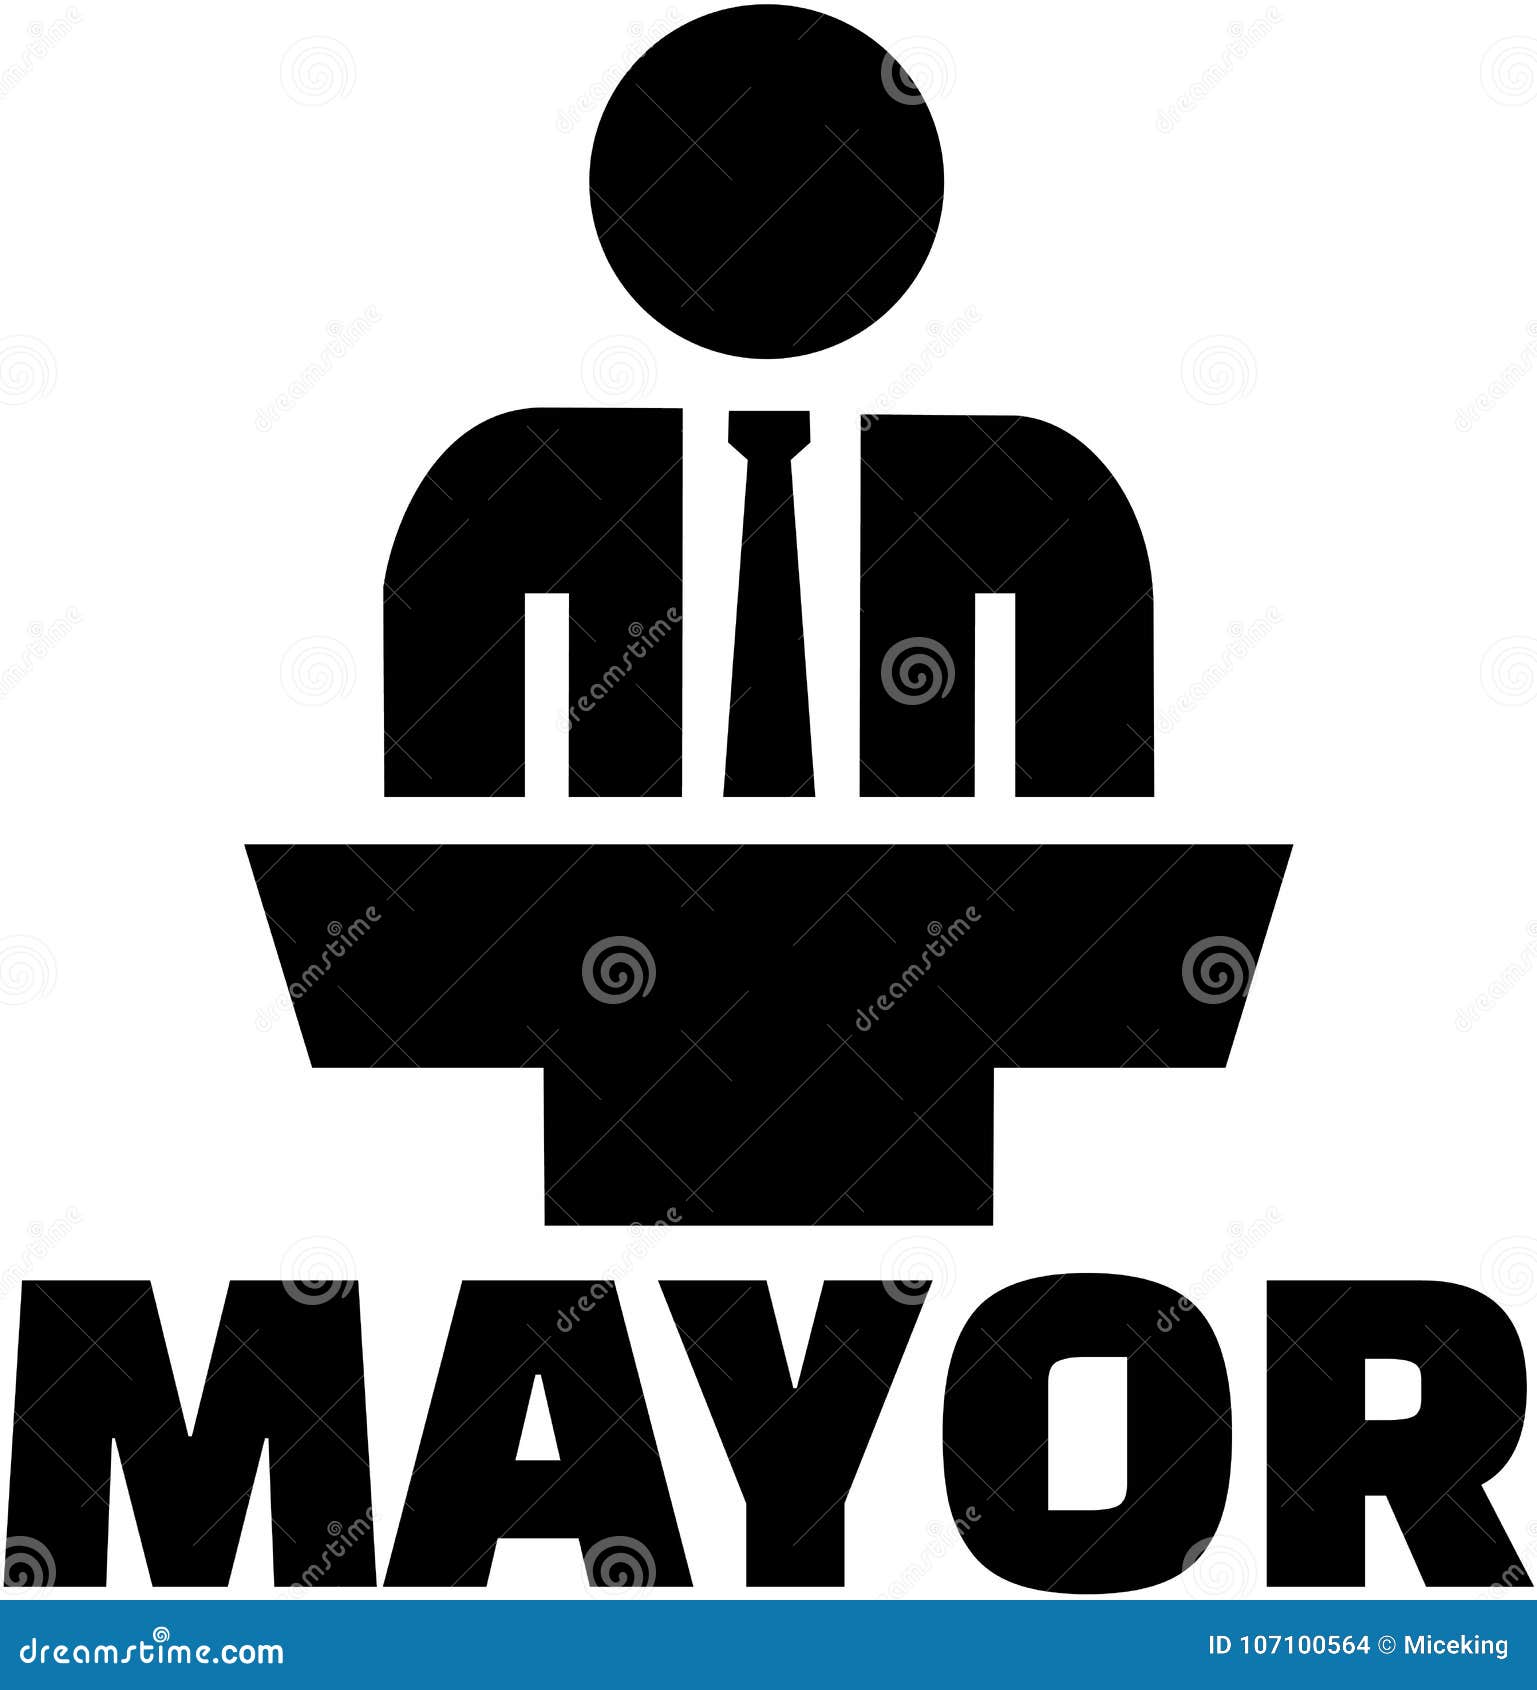 mayor word with icon